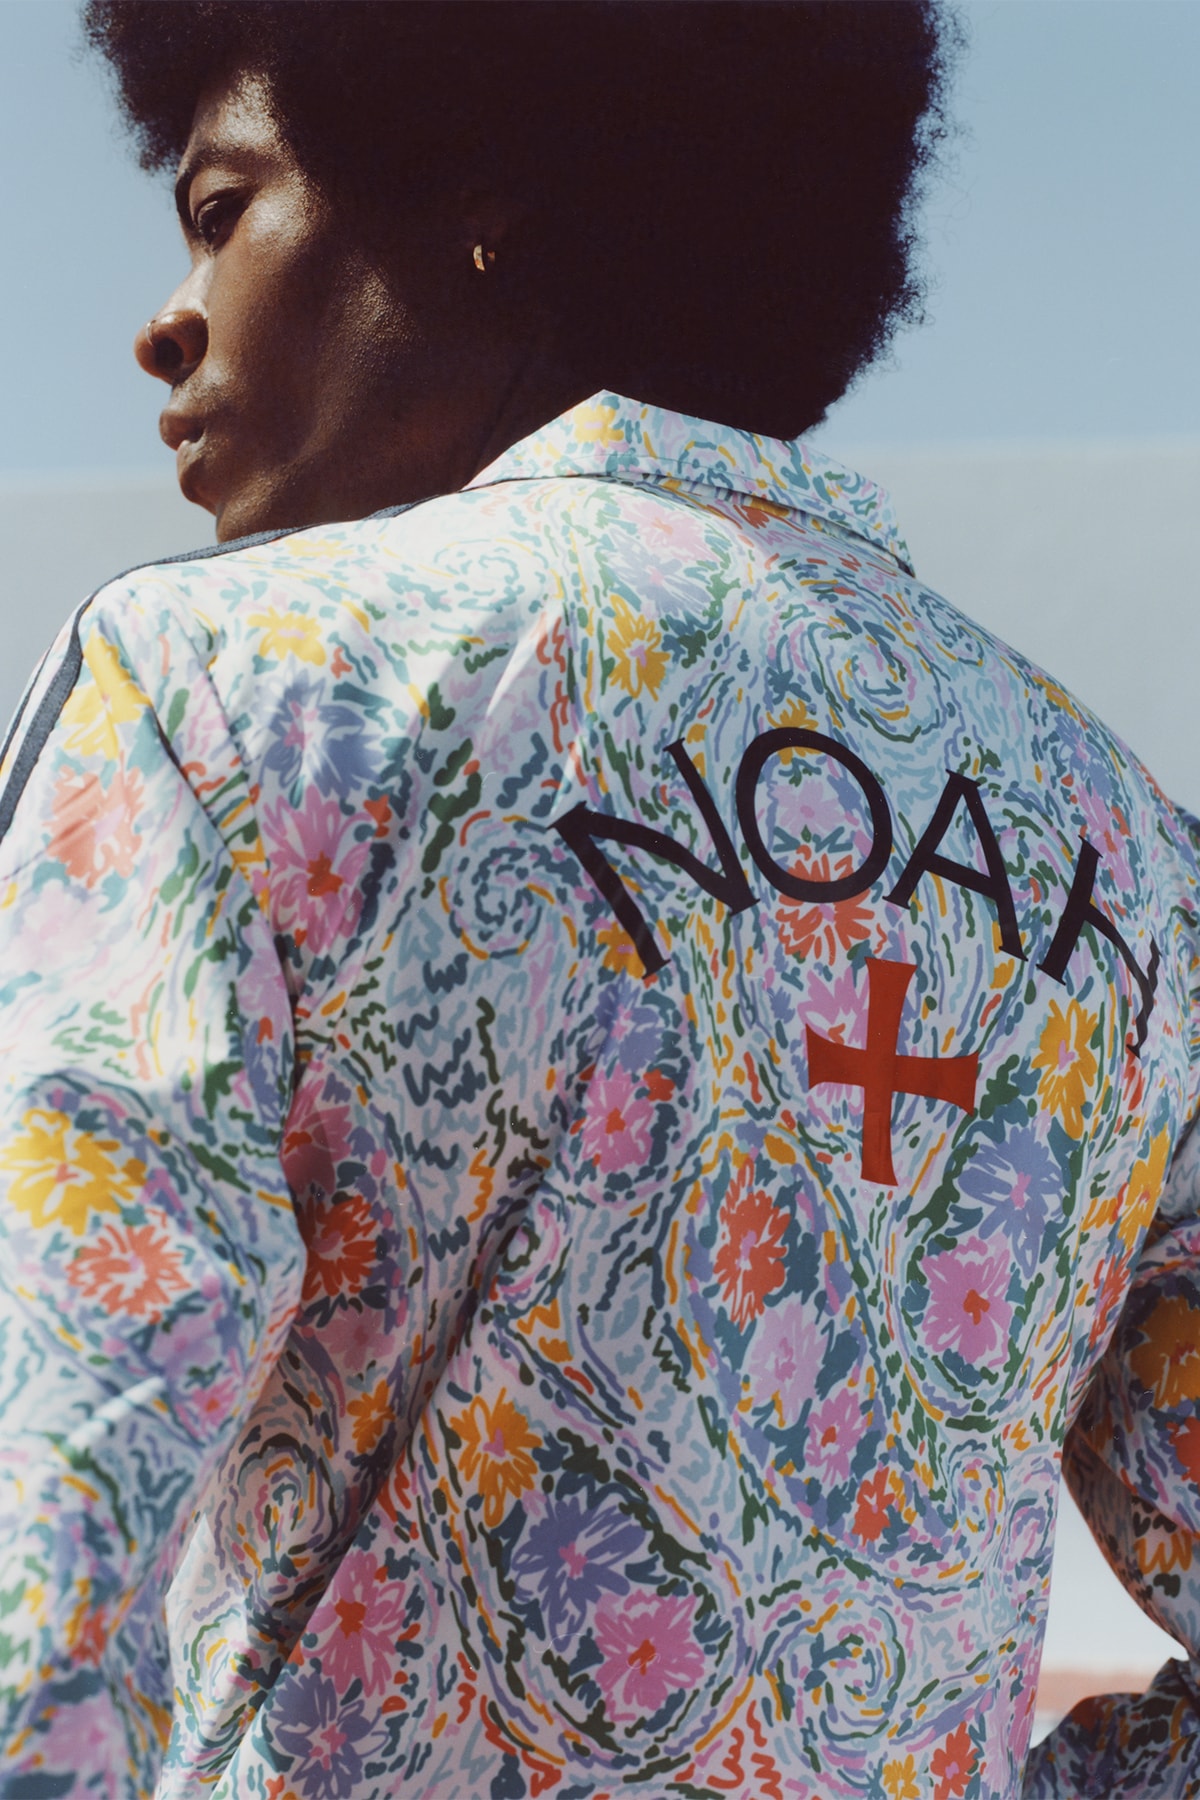 NOAH x adidas Originals Spring/Summer 2021 Collection Lookbook